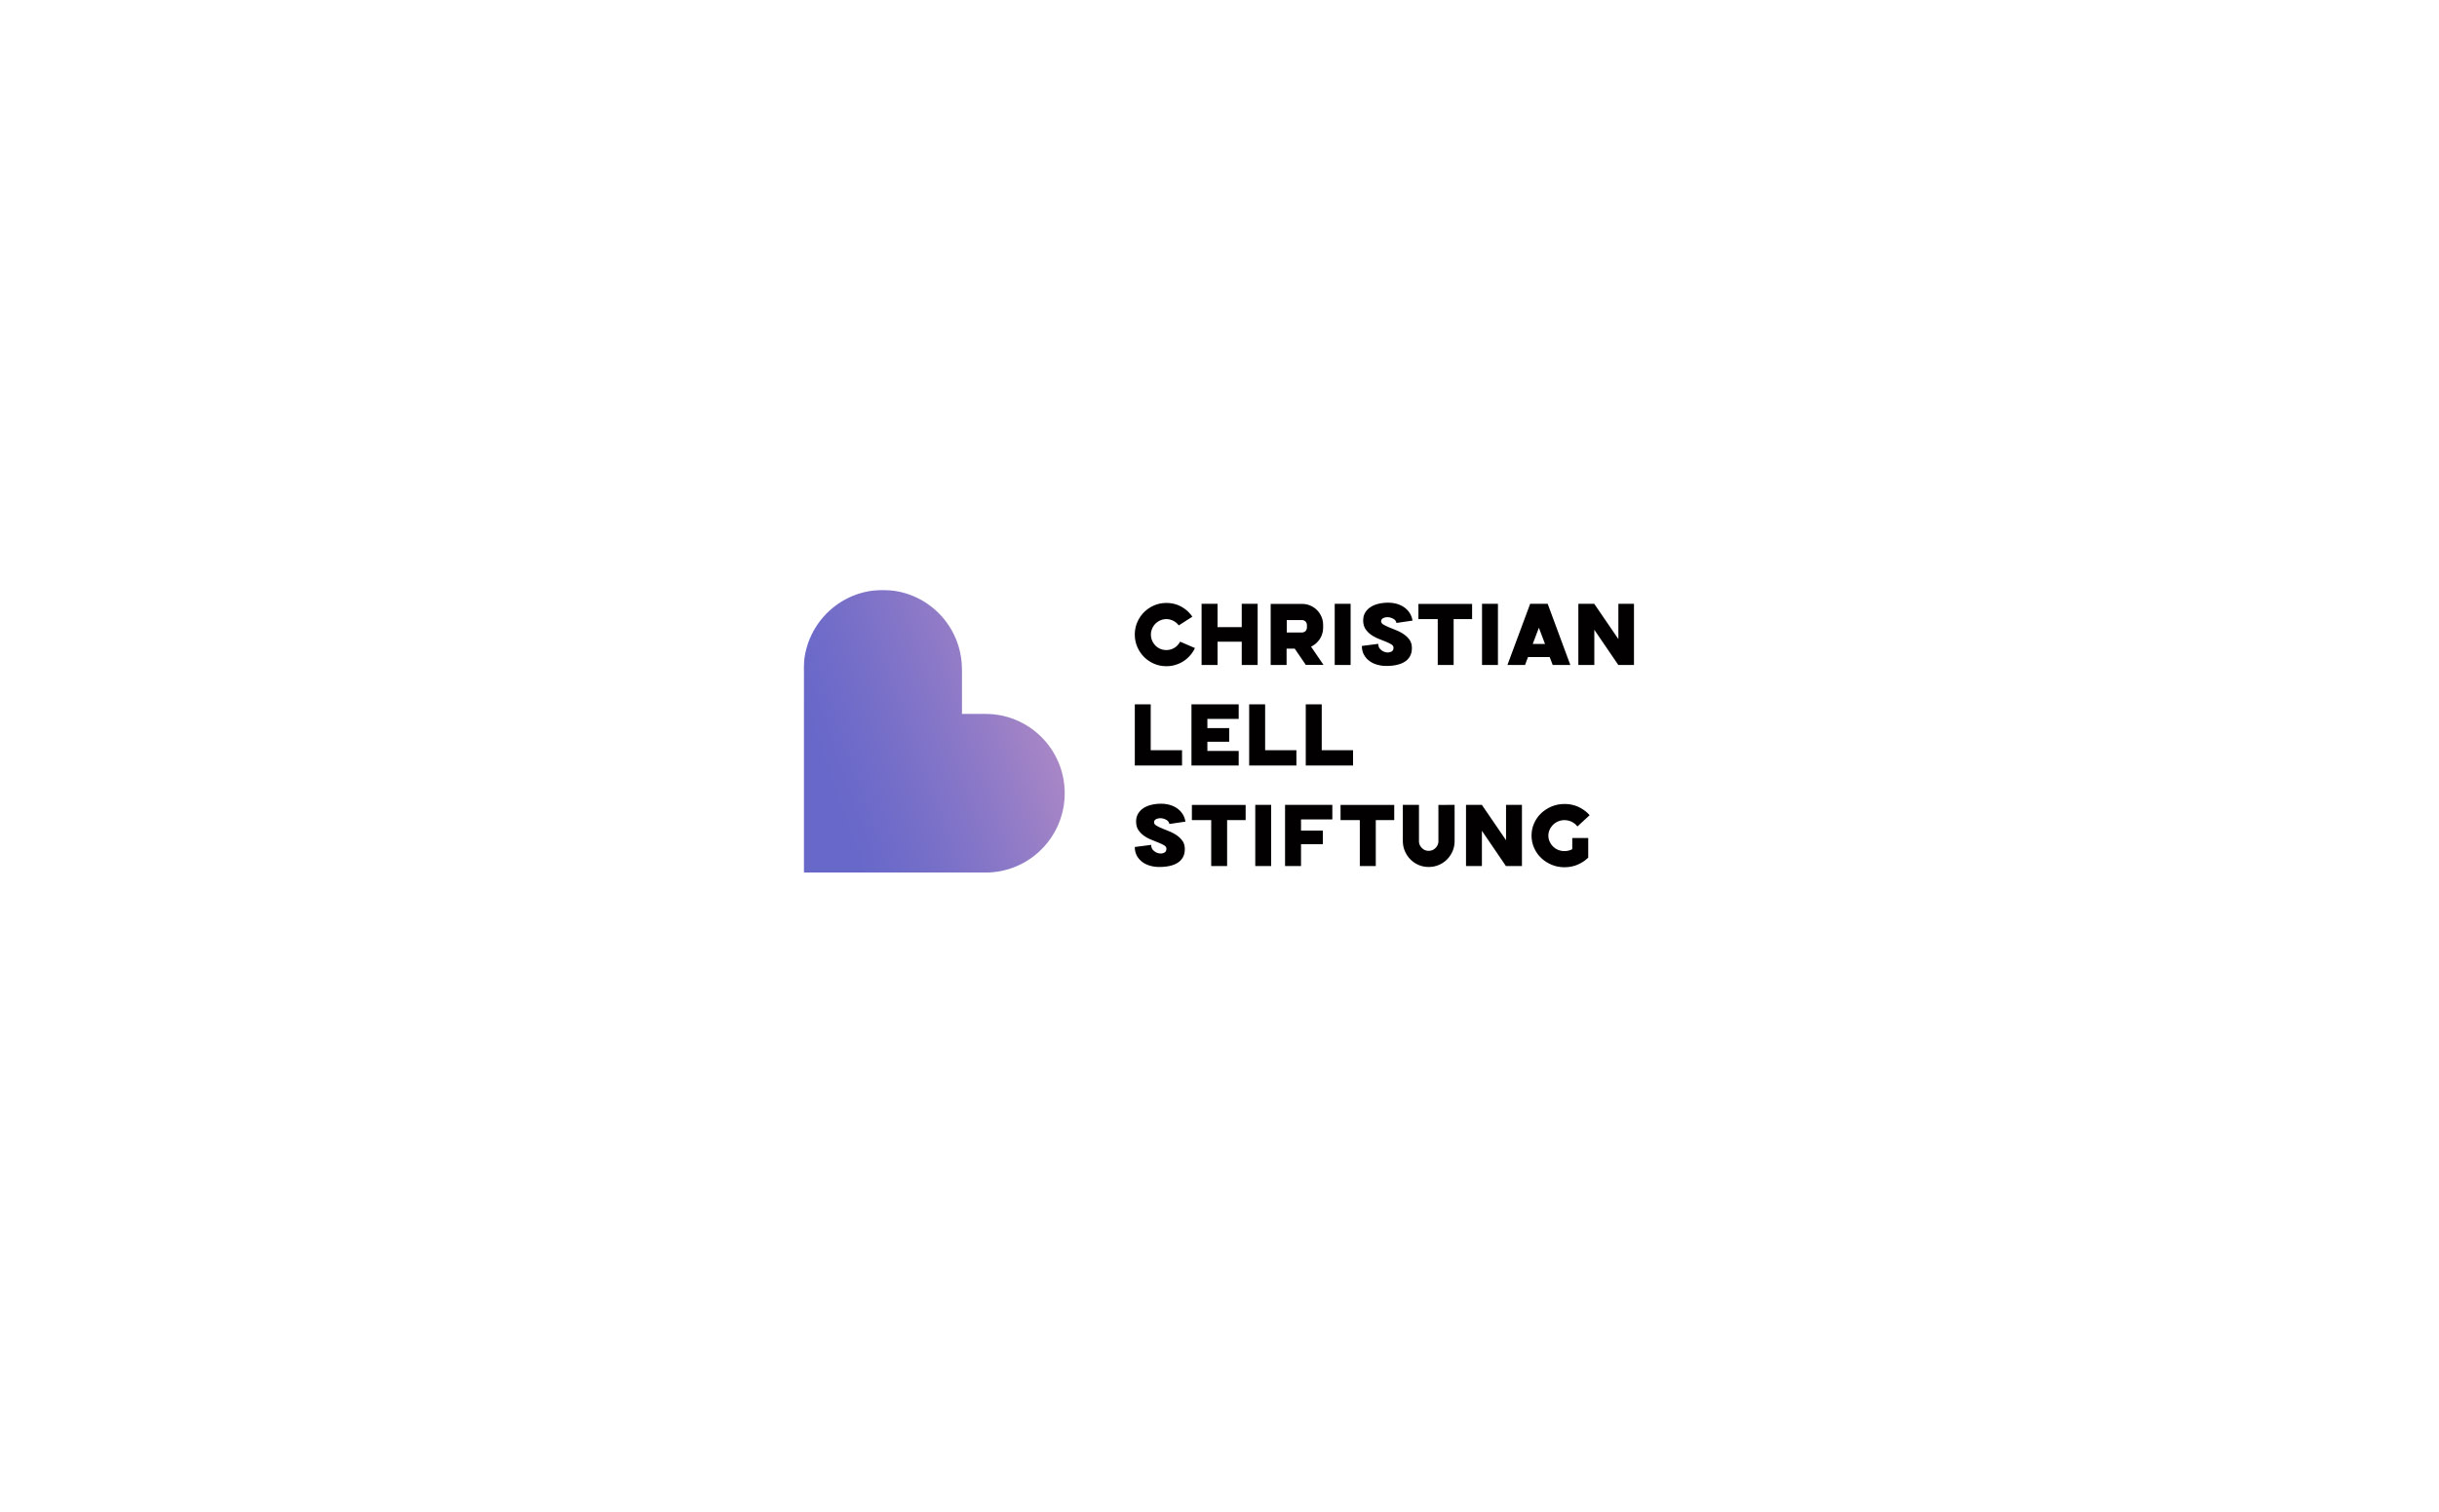 2030-christian-lell-stiftung-design-logo-2